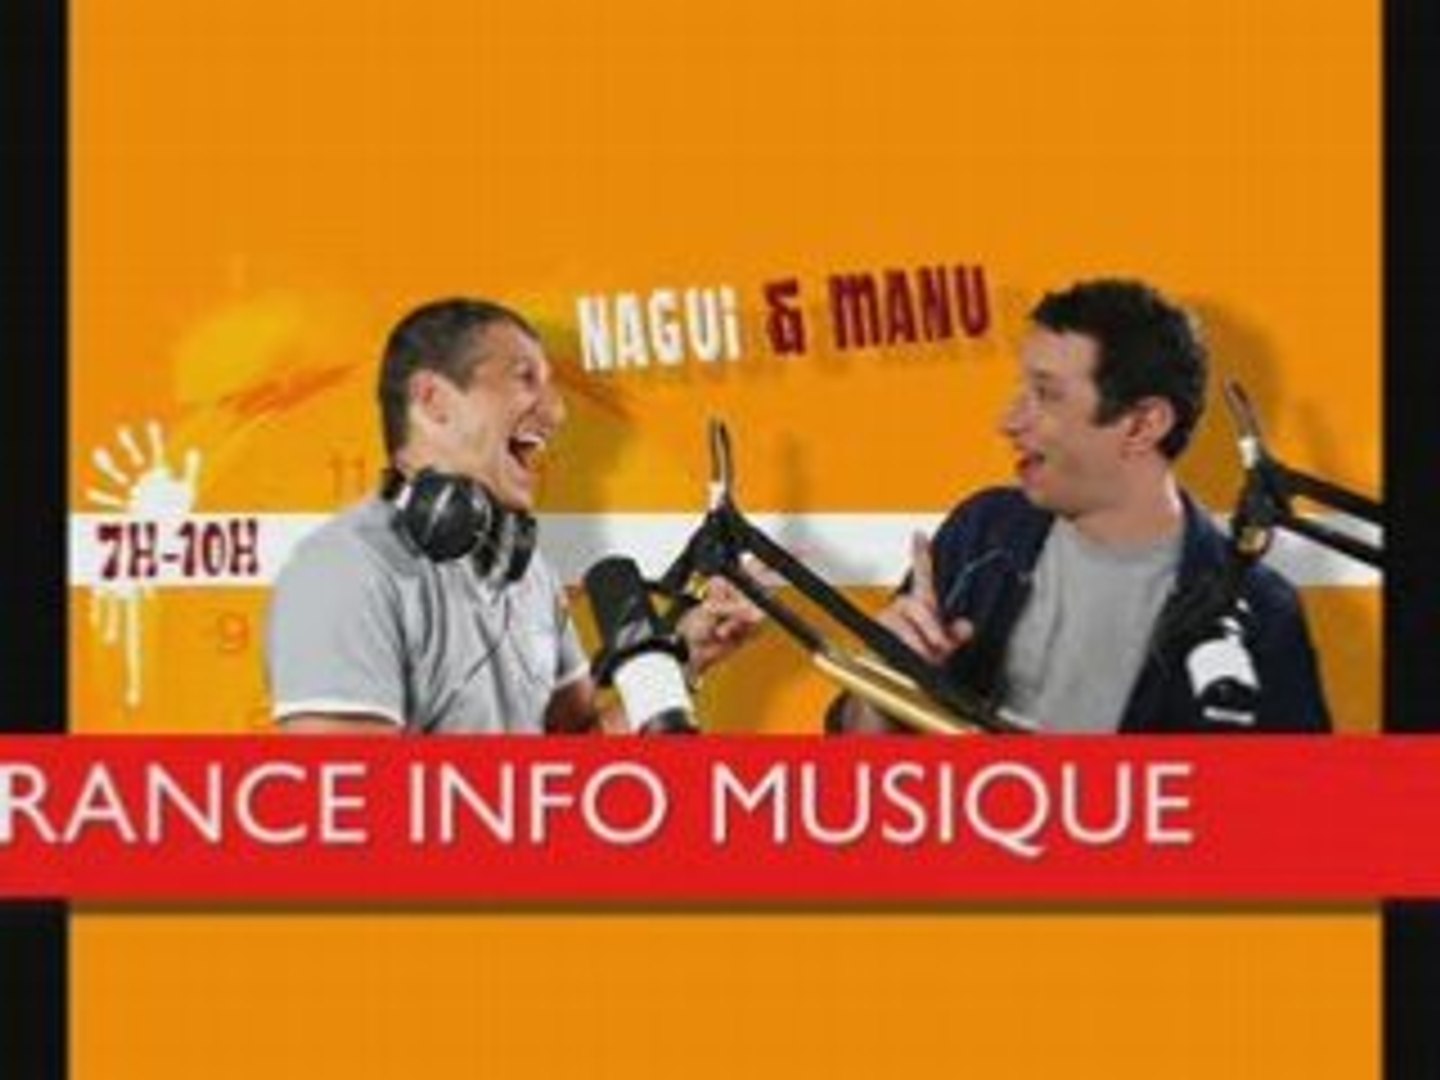 France Info Musique" by Nagui et manu [Virgin Radio] - Vidéo Dailymotion